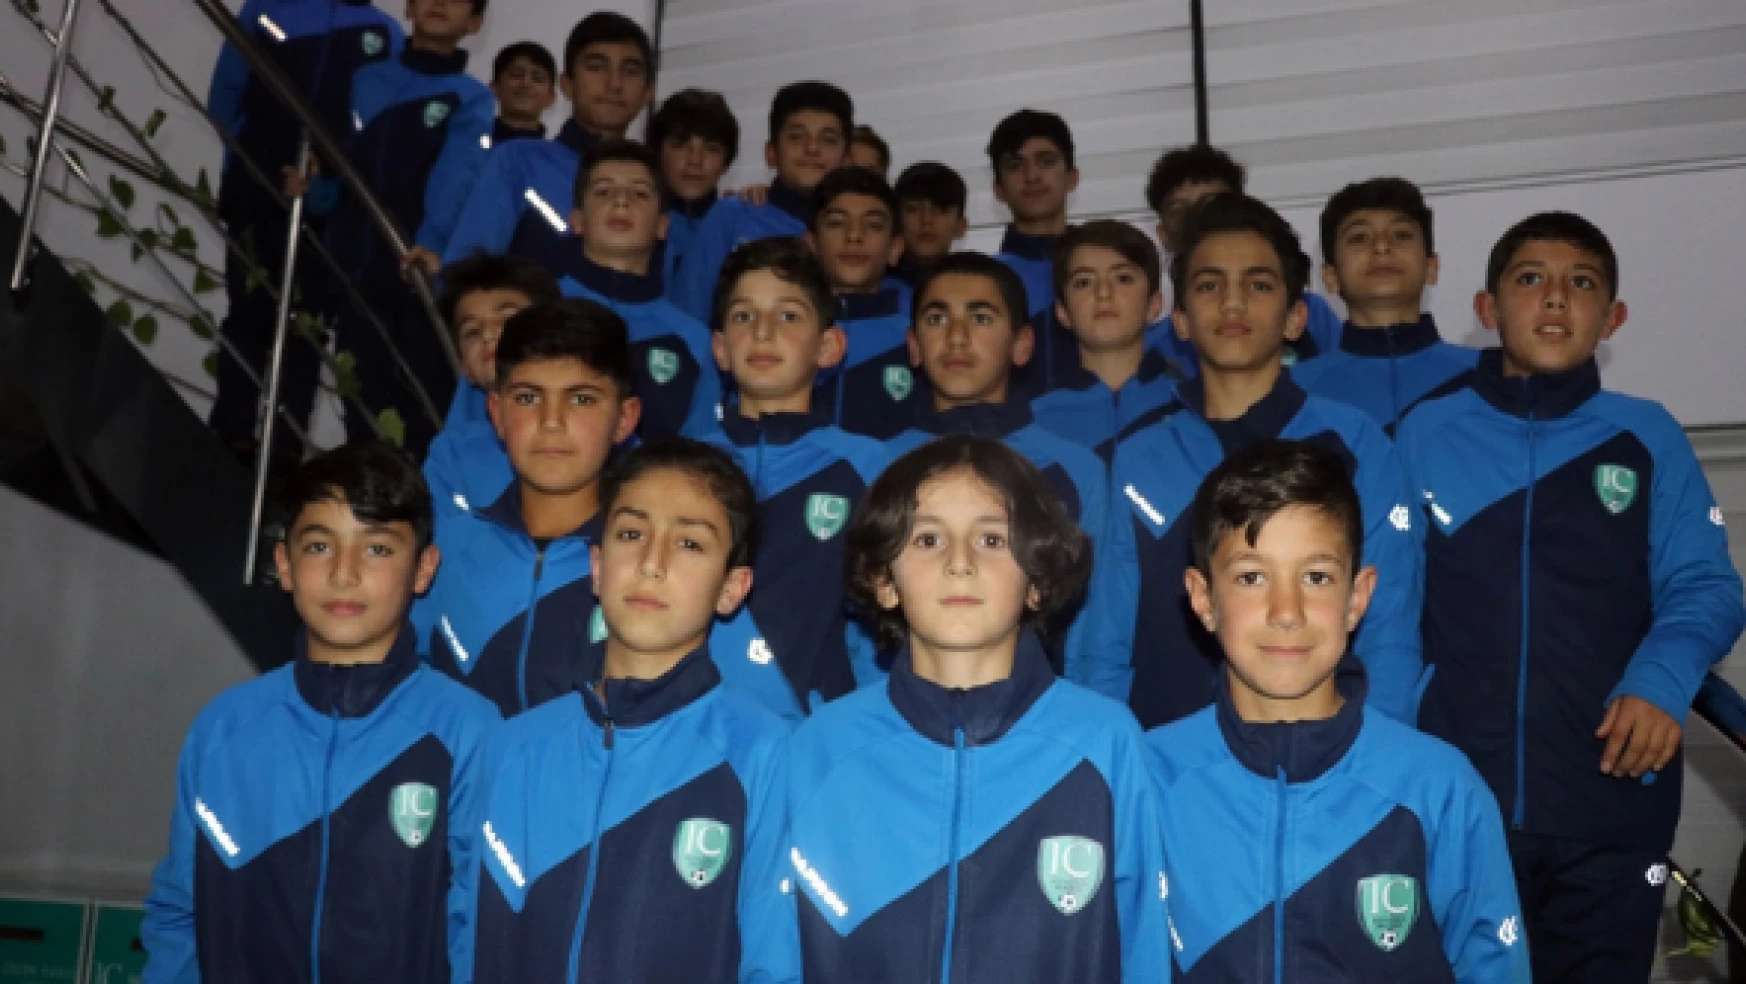 IC Elit Futbol Akademi A Milli Takım'a futbolcu yetiştirecek